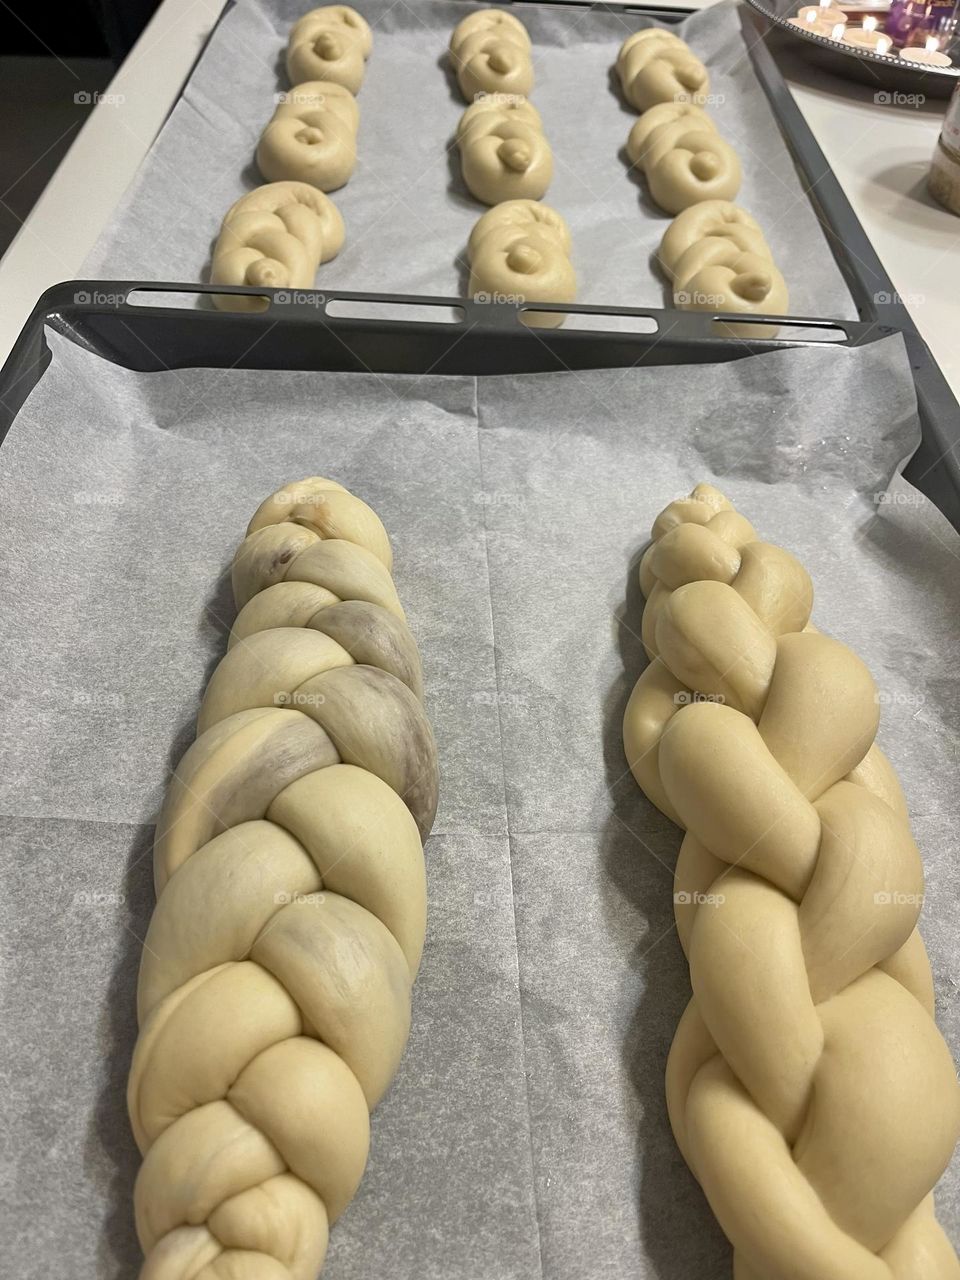 Challah dough before bake 